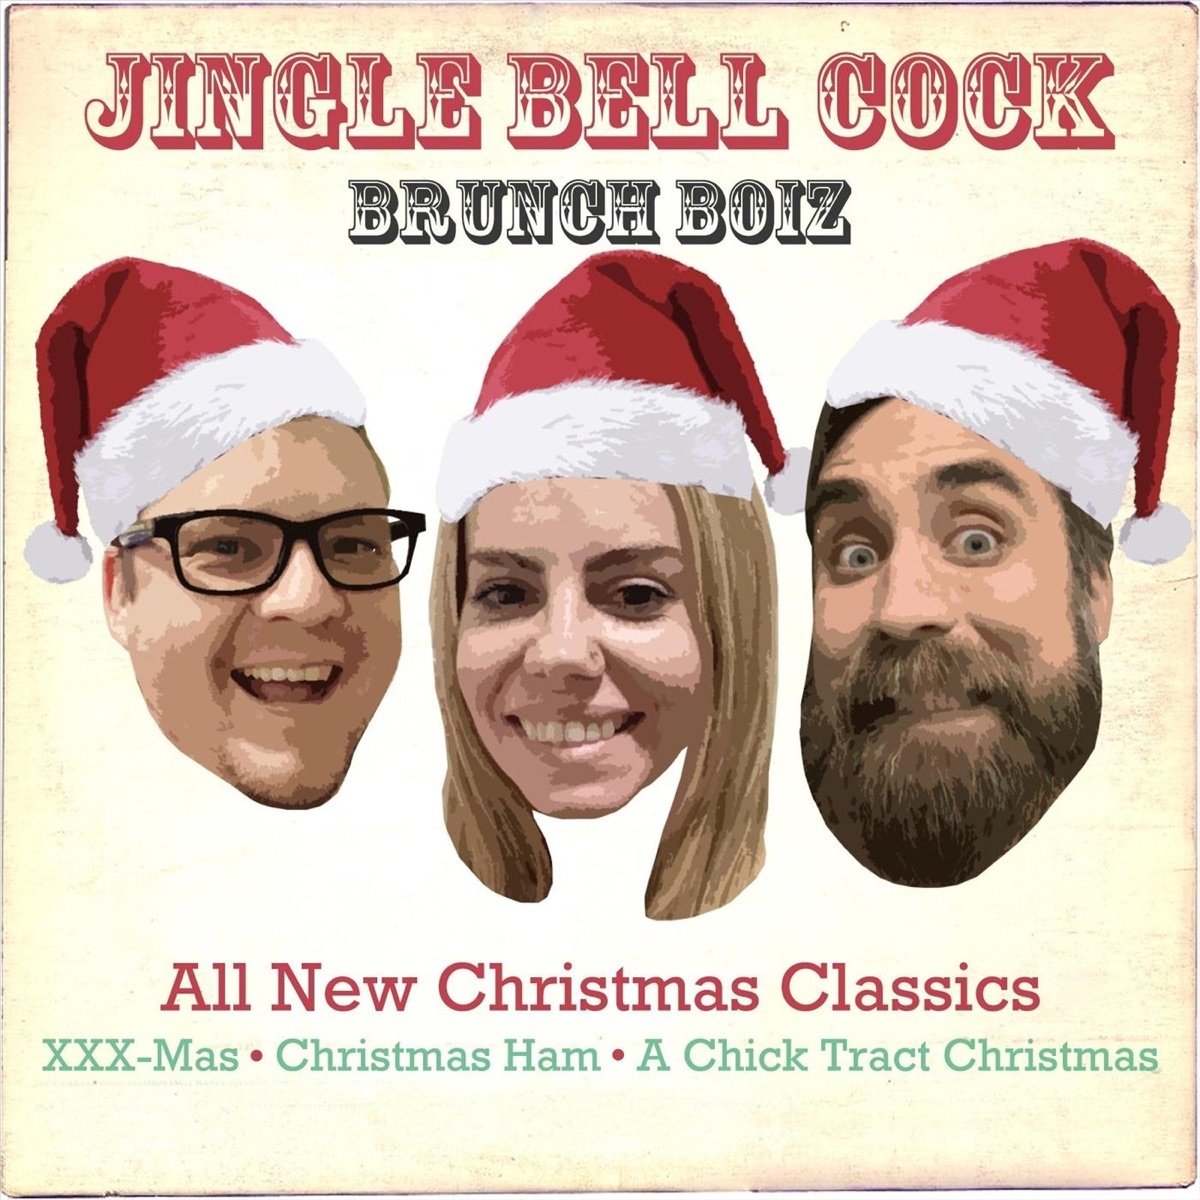 Jingle Bells: albums, songs, playlists